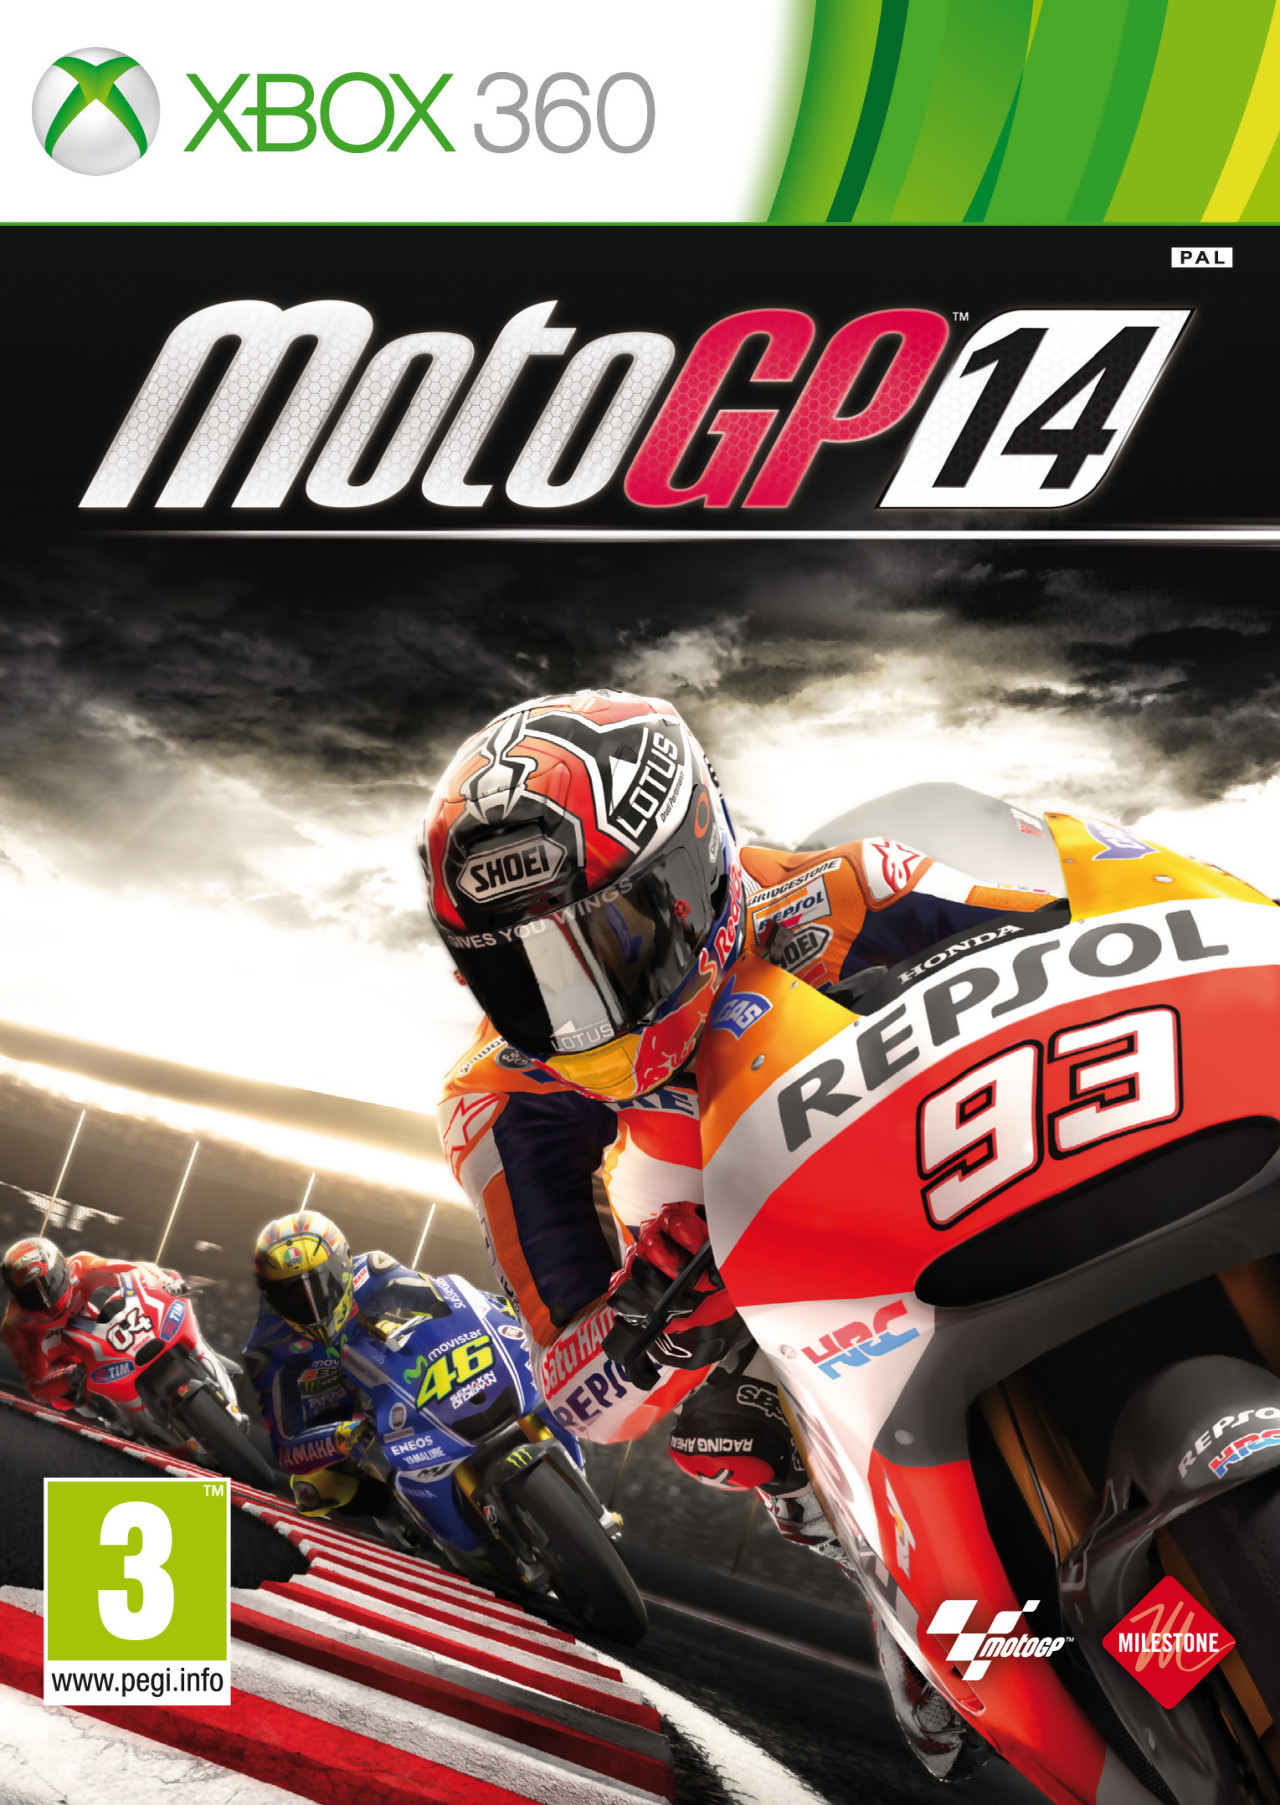 Gameteczone Jogo PS4 MotoGP 19 - Milestone - São Paulo SP